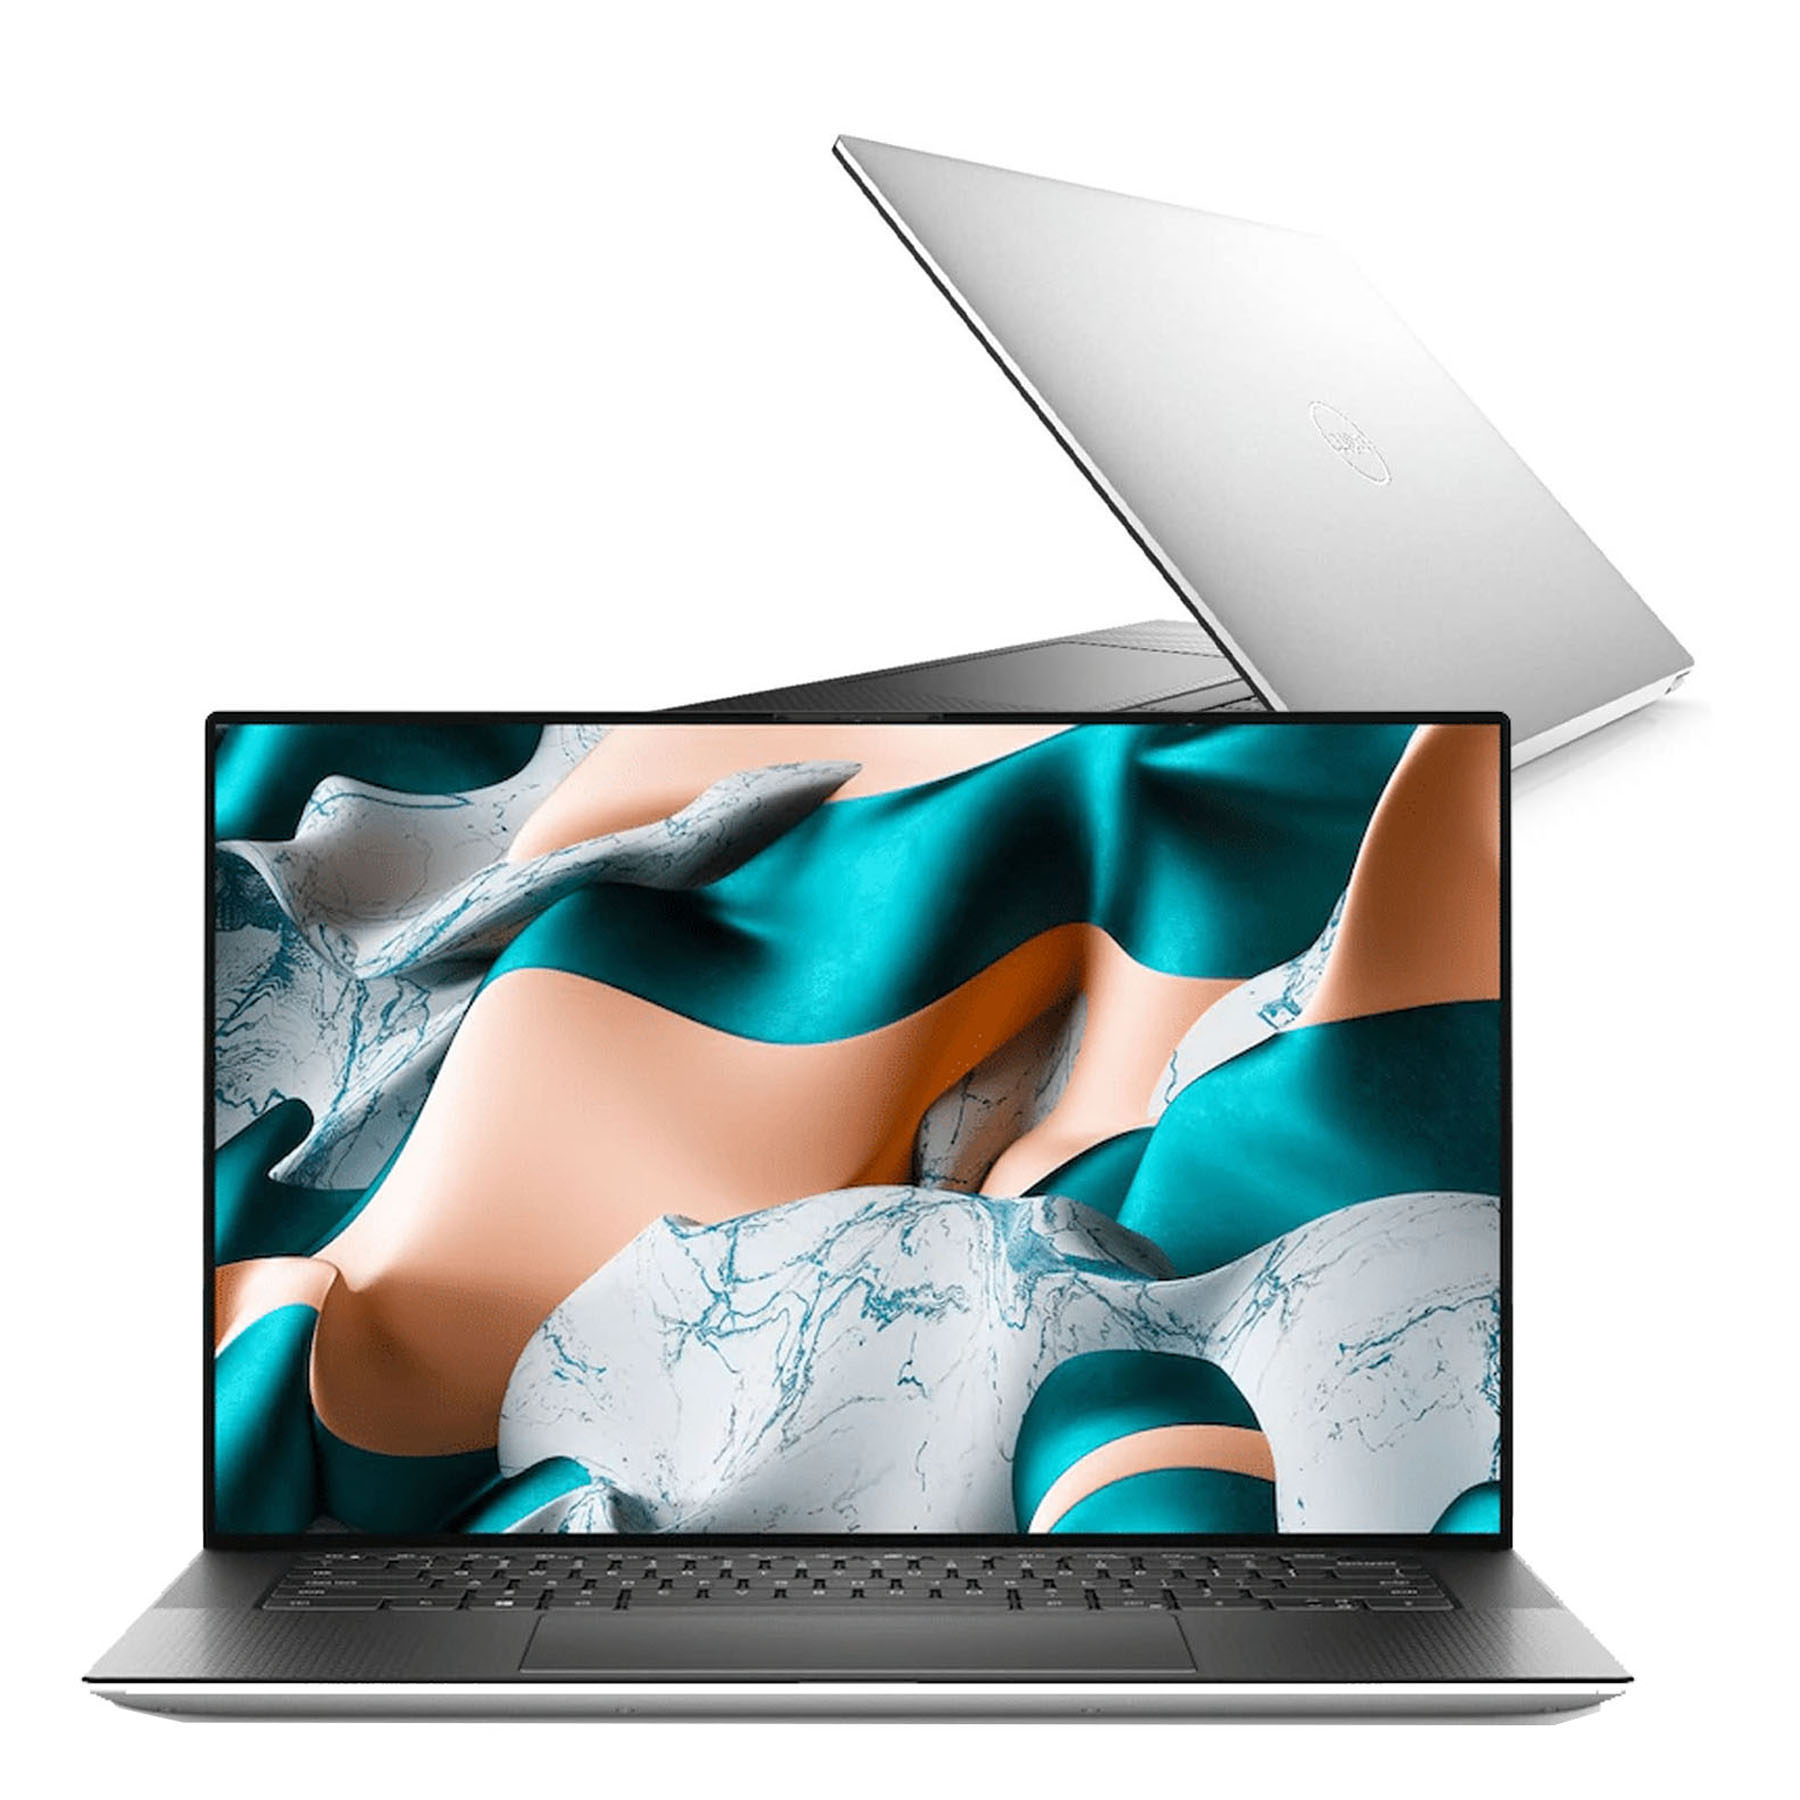 [Mới 100%] Laptop Dell XPS 9500 (Core i7-10750H, 16GB, 512GB, VGA NVIDIA GTX 1650Ti, 15.6 inch 4K UHD+ IPS)